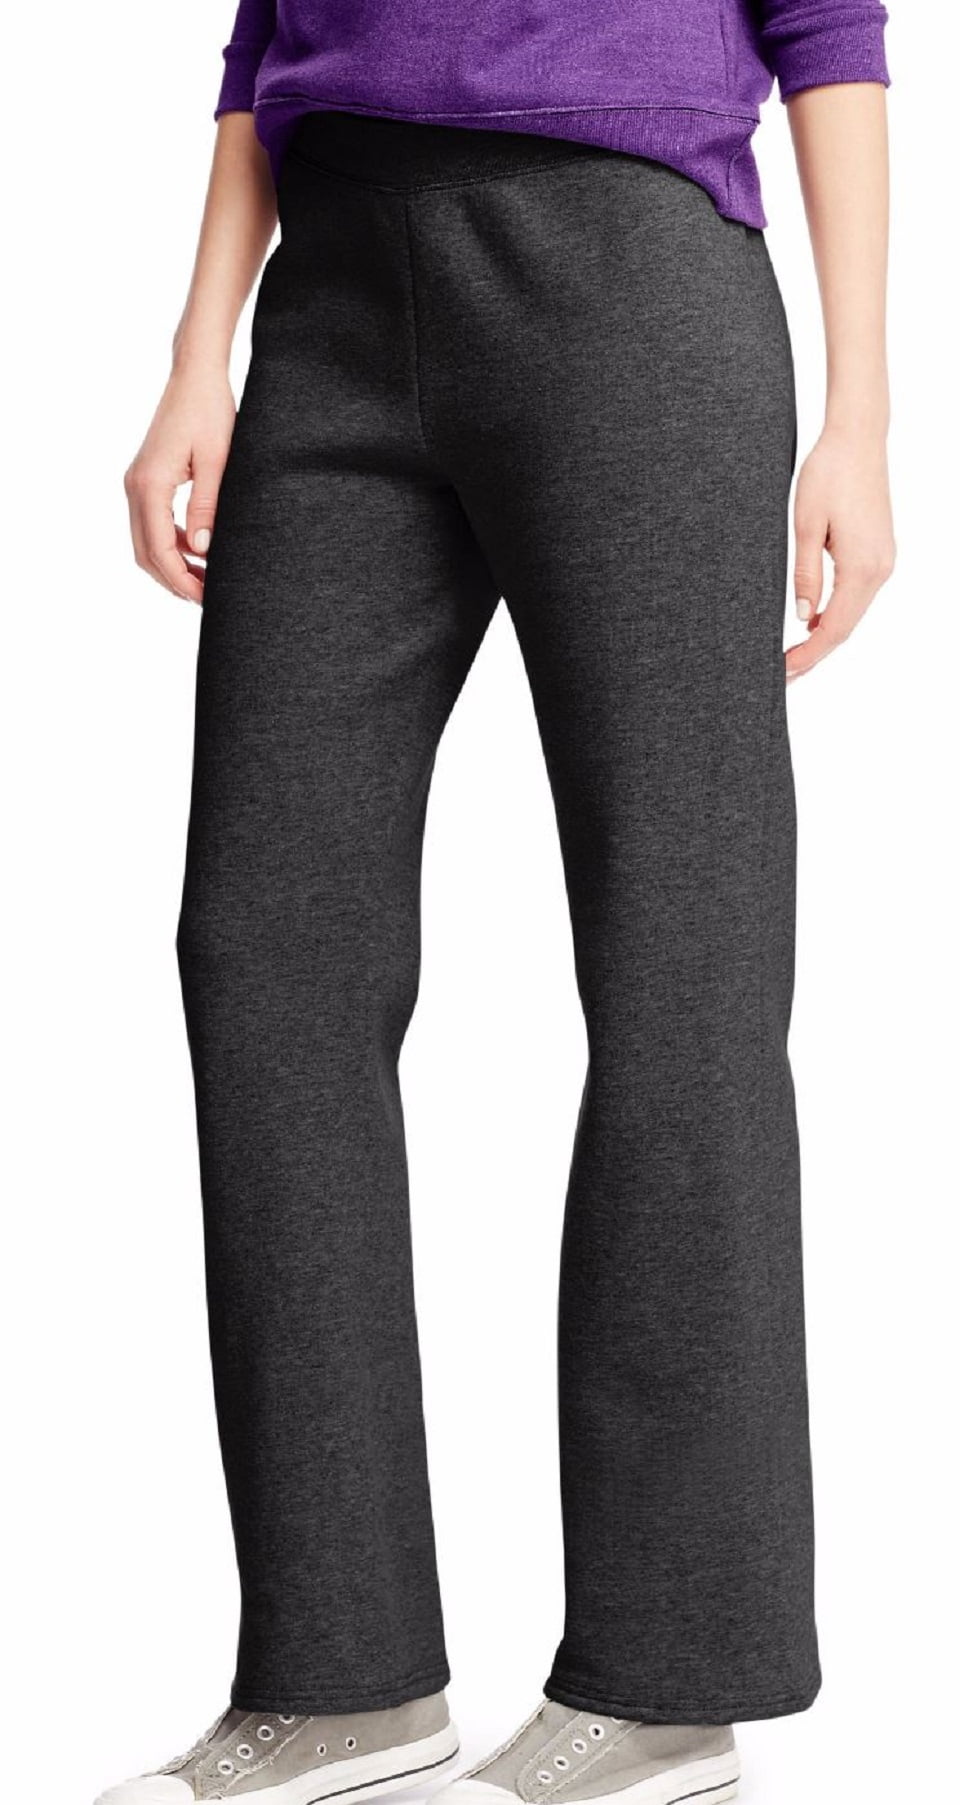 Women's Comfortblend Fleece Sweatpants (X-Large, Ebony) - Walmart.com